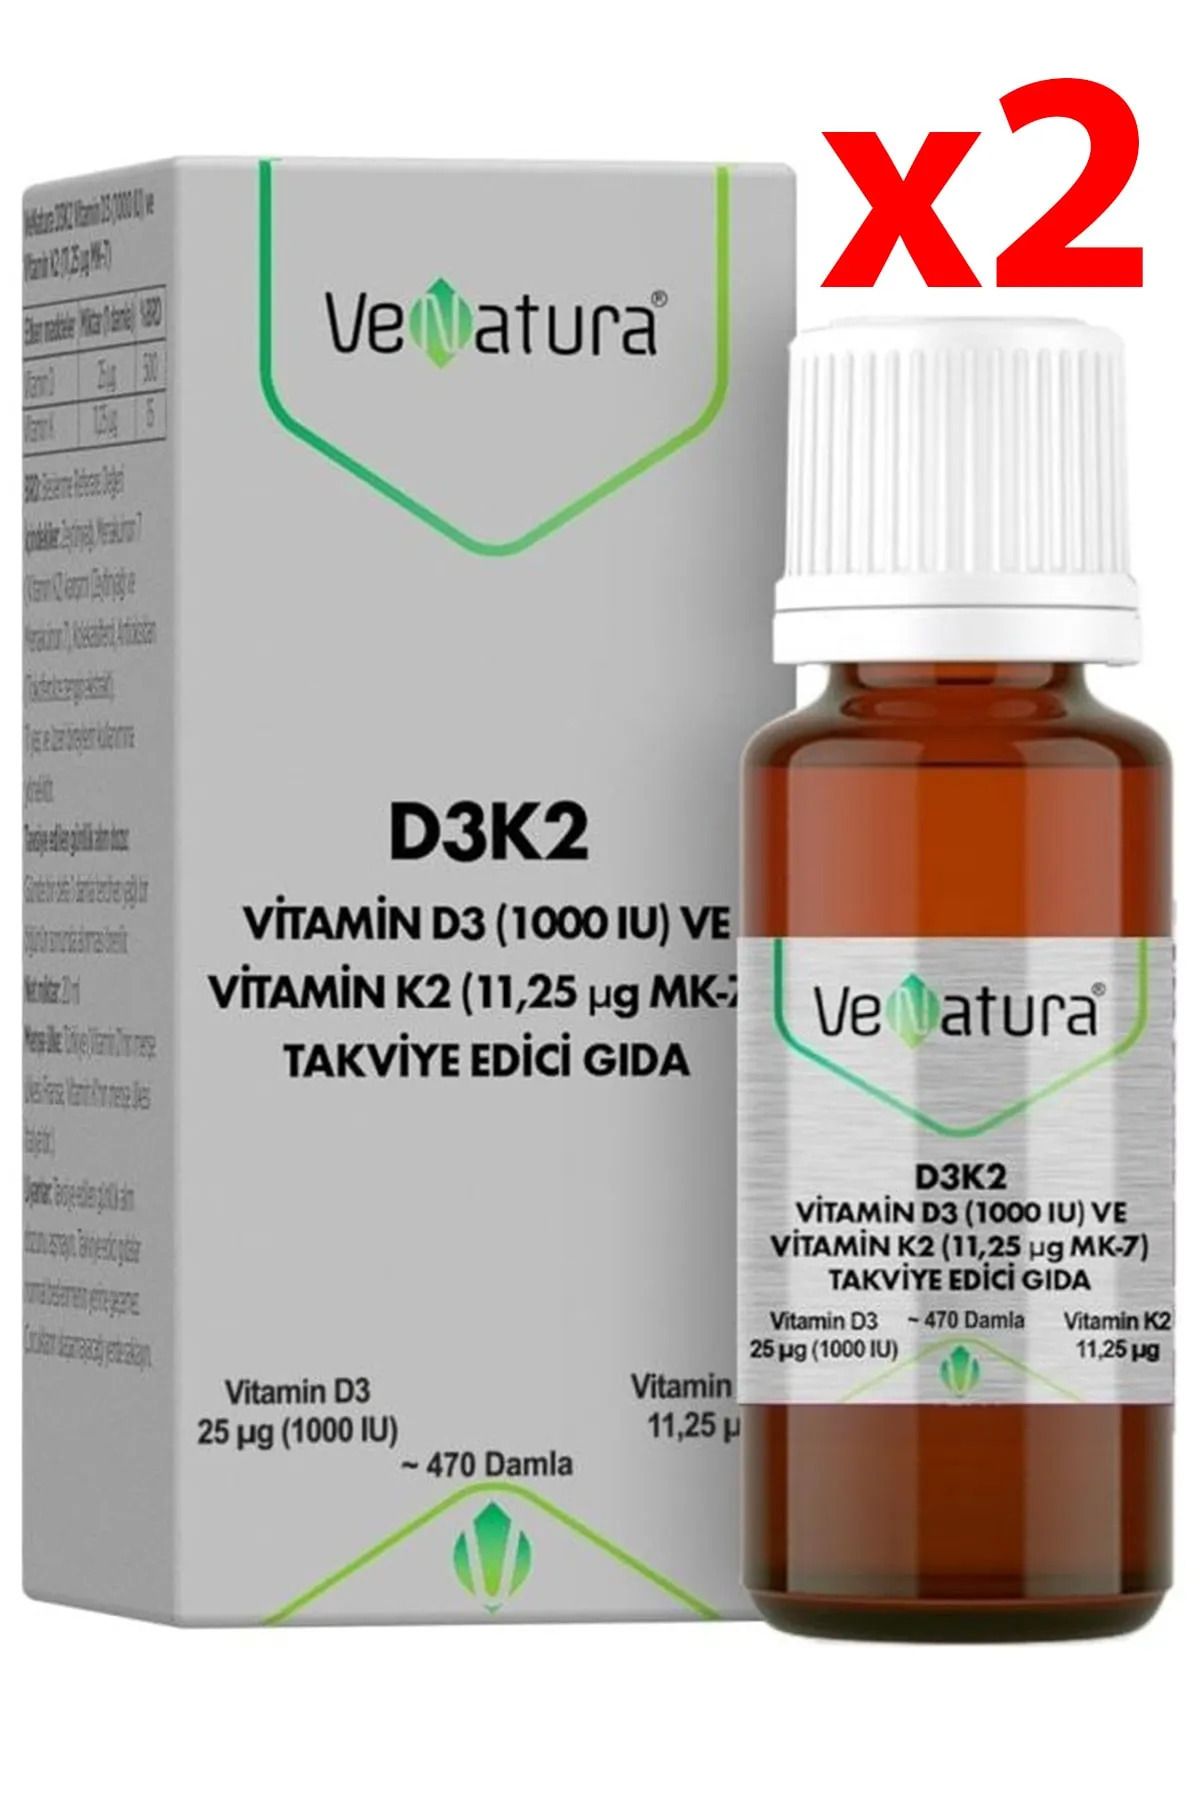 Venatura Vitamin D3 K2 Menakuinon 7 Damla 20 ml 2 Adet